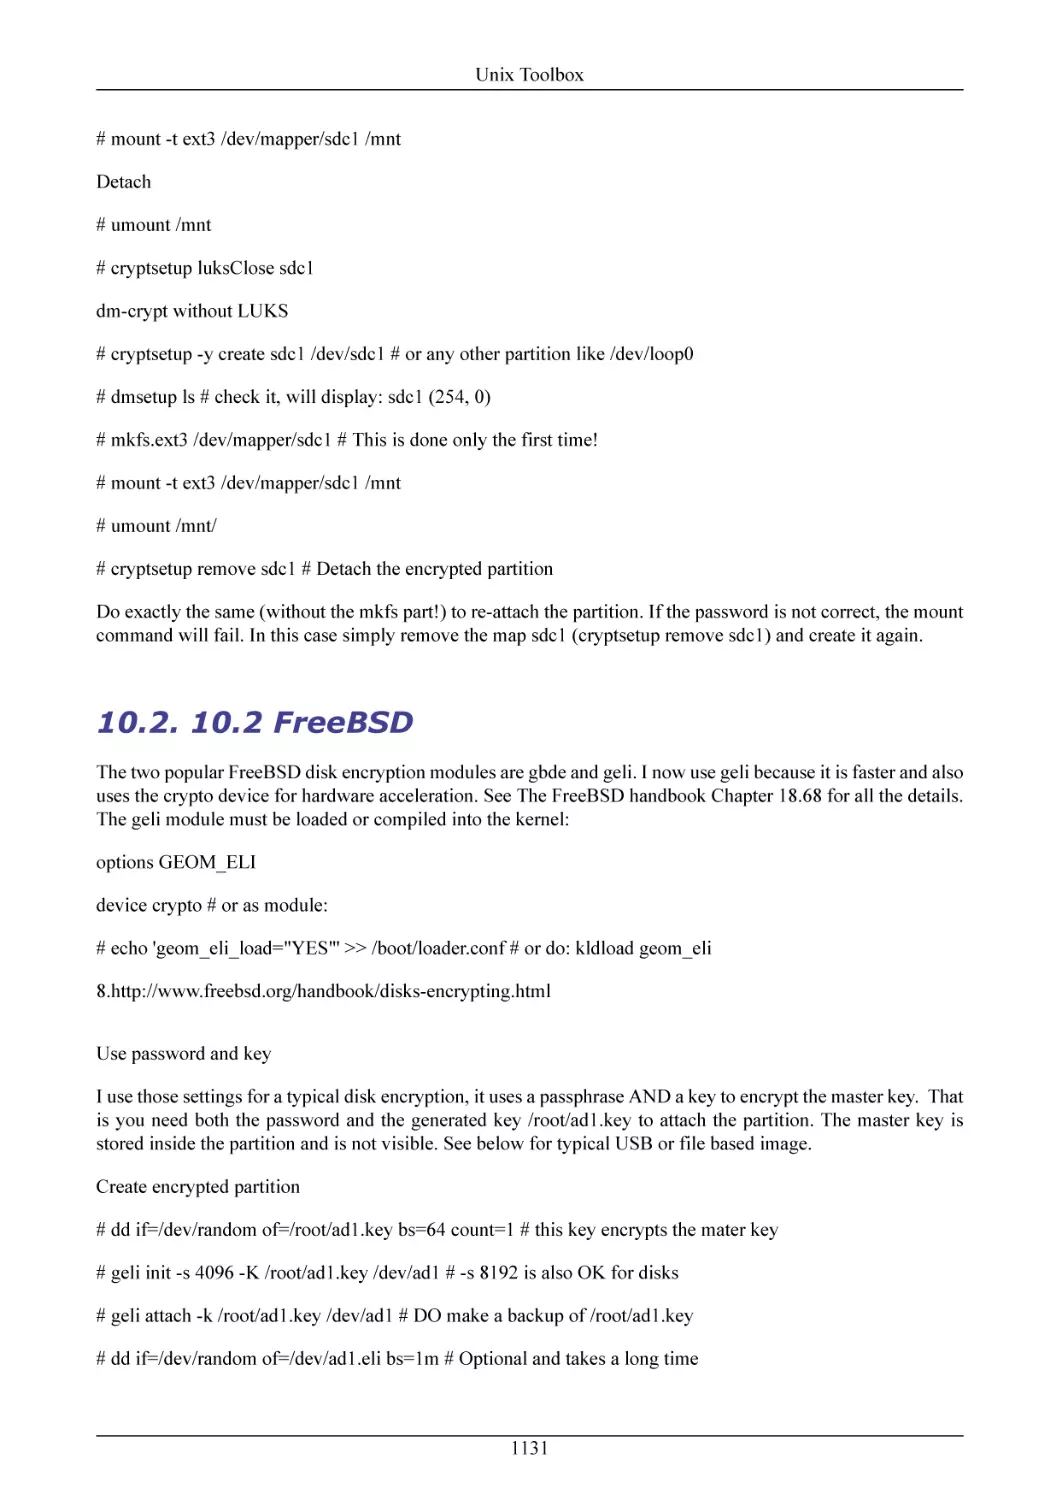 10.2 FreeBSD